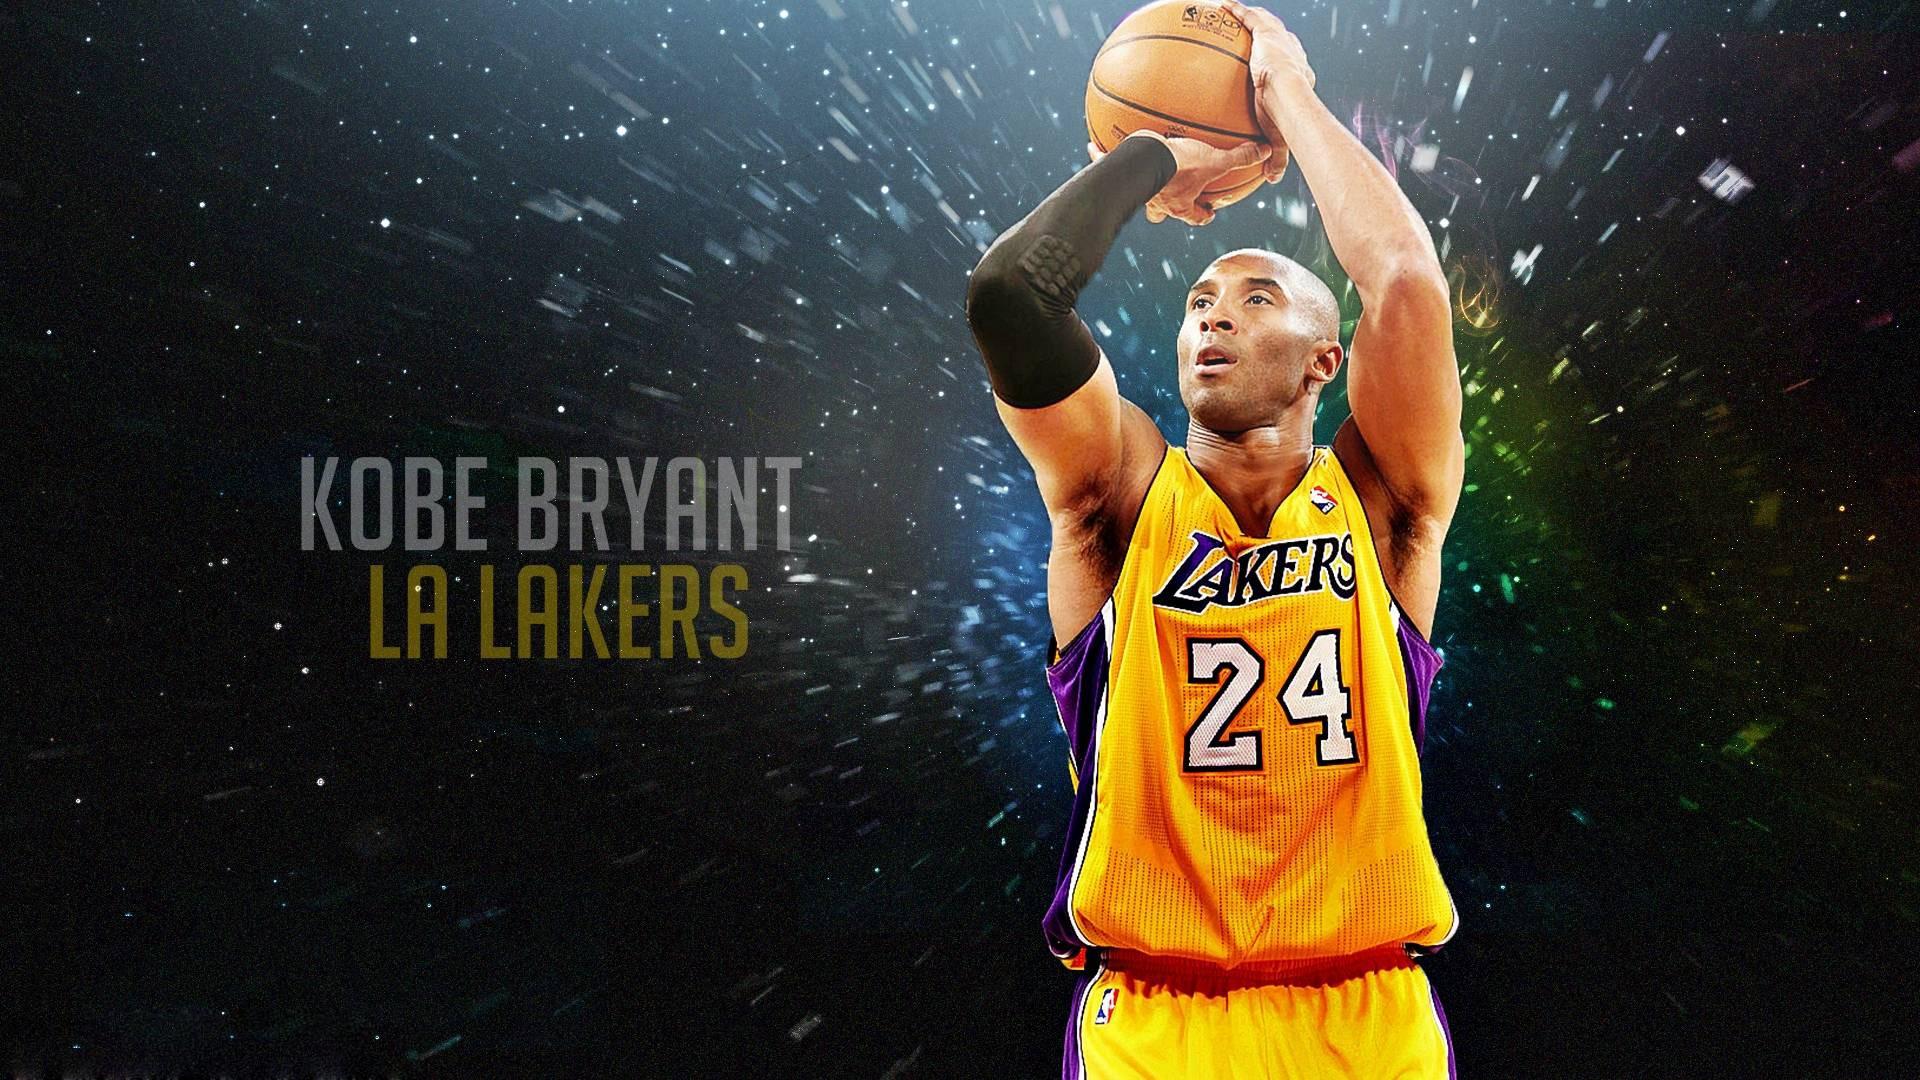 Free Kobe Bryant Wallpaper Basketball Desktop Image